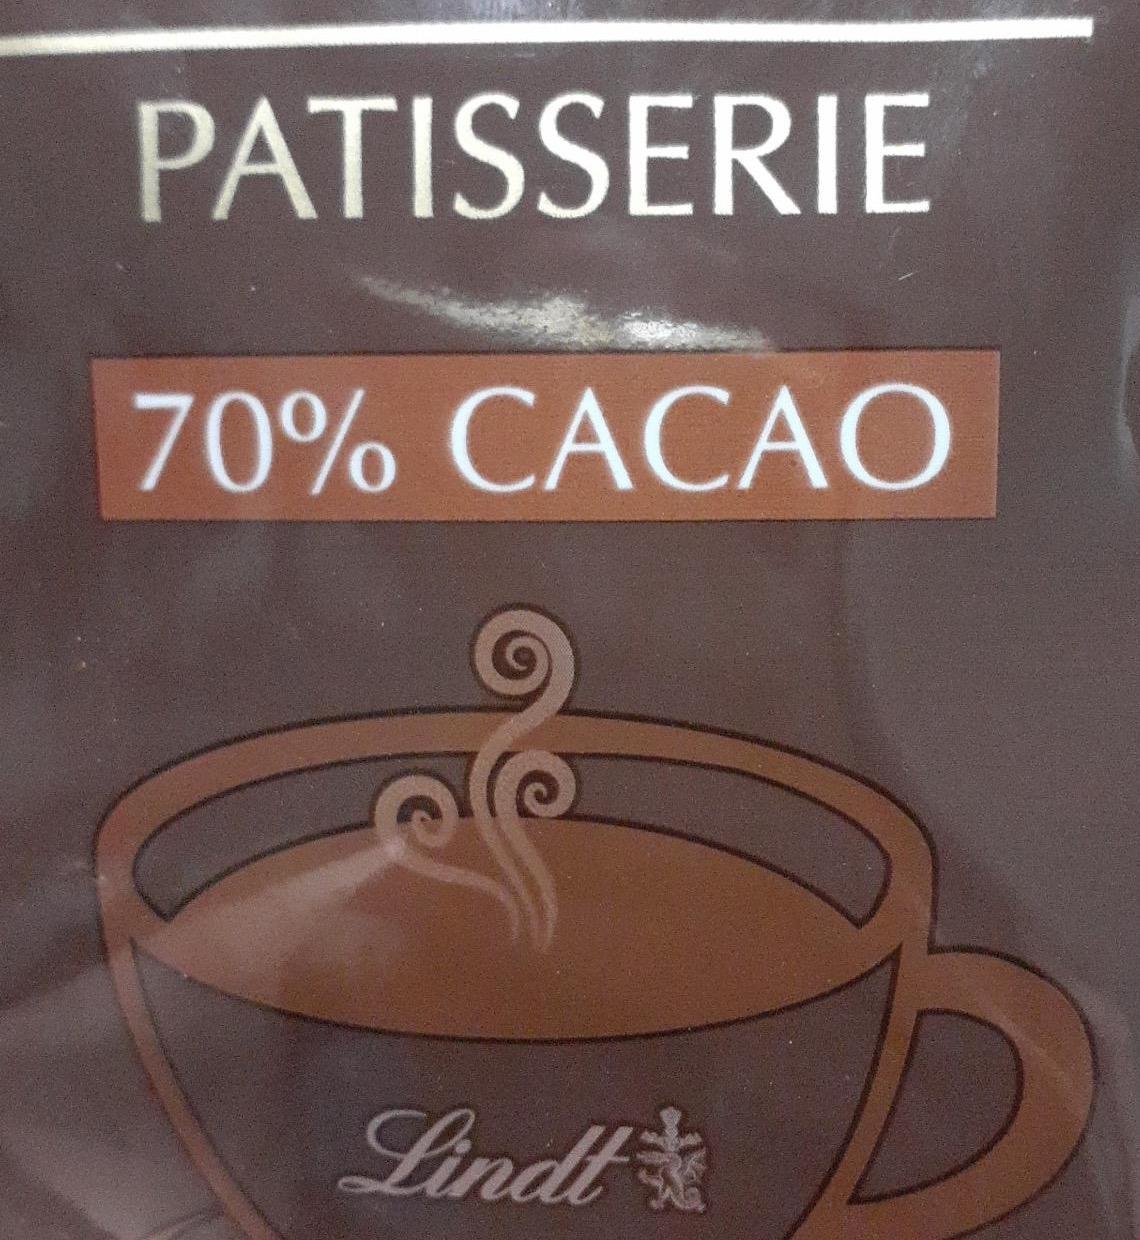 Képek - Lindt Patisserie 70% cacao